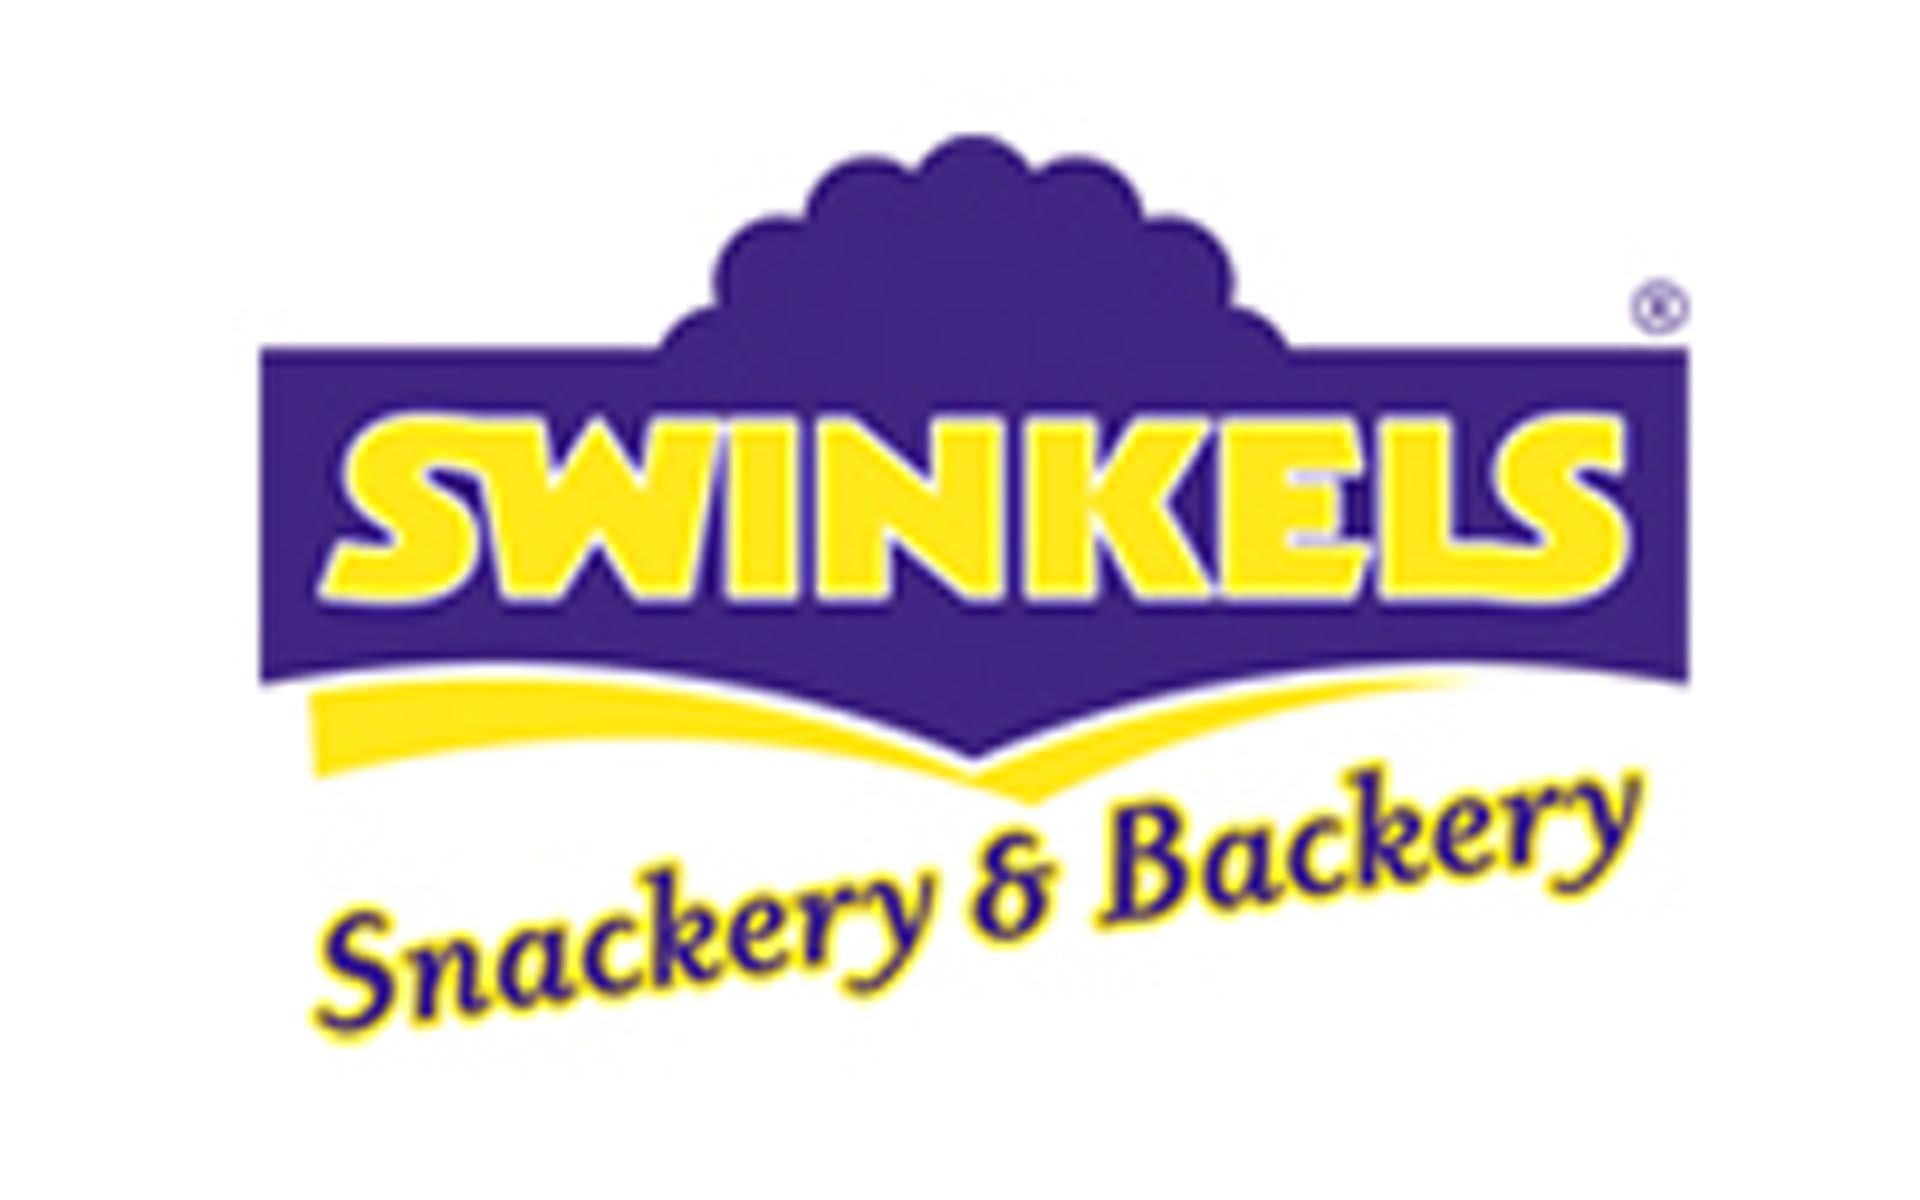 Overname Swinkels Snackery & Backery bv